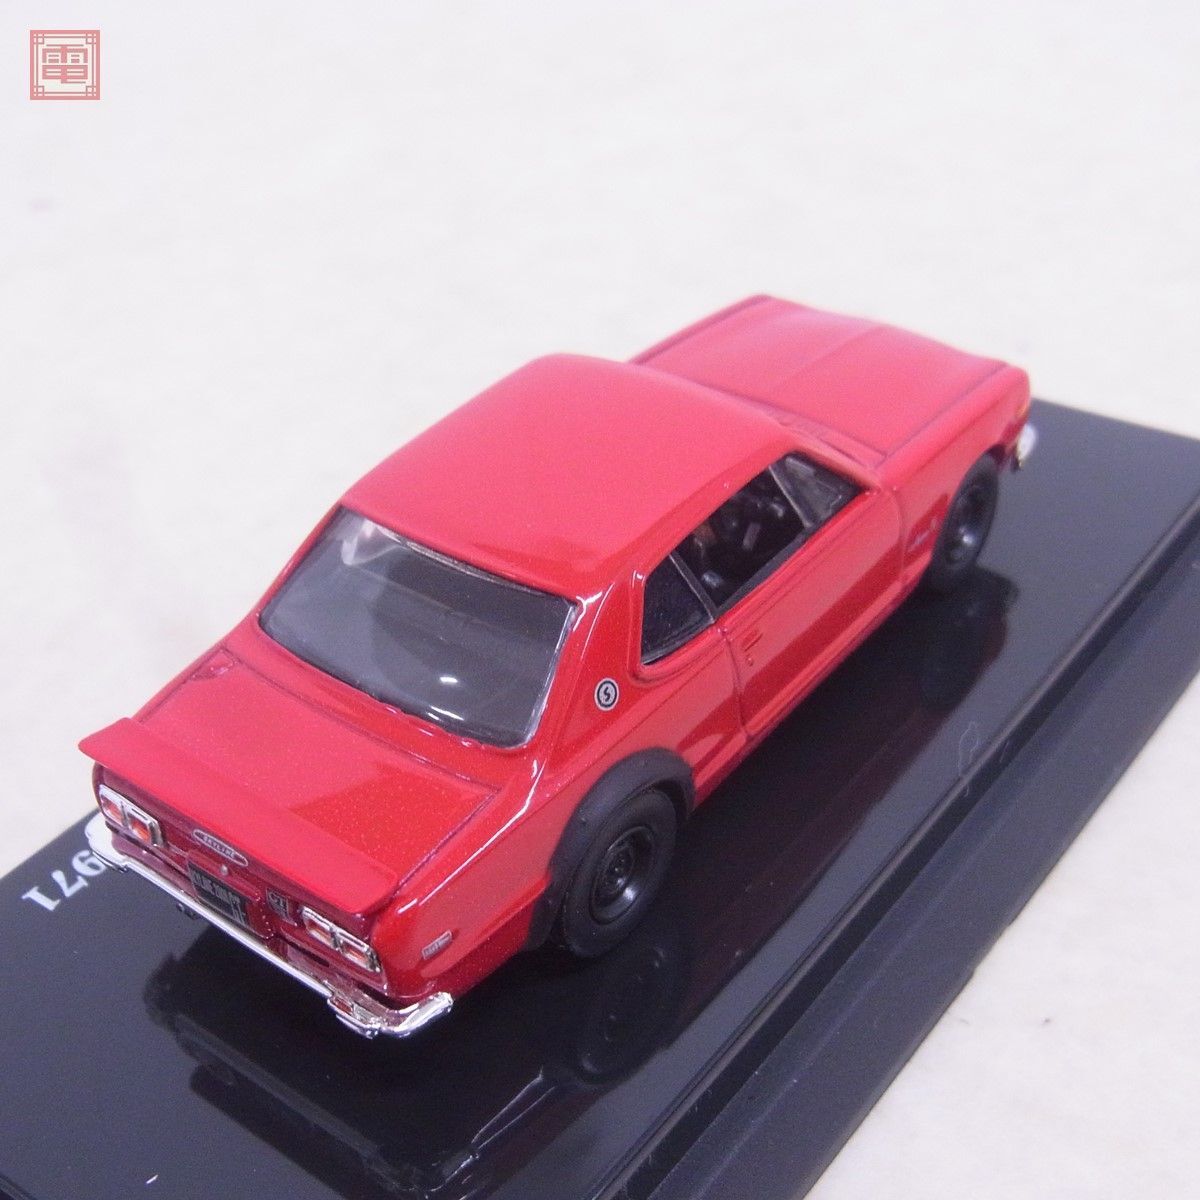  Kyosho 1/64 бисер коллекция Nissan Skyline 2000GT-R (KPGC10)/ Mazda Savanna RX-7 и т.п. совместно 5 шт. комплект KYOSHO[10